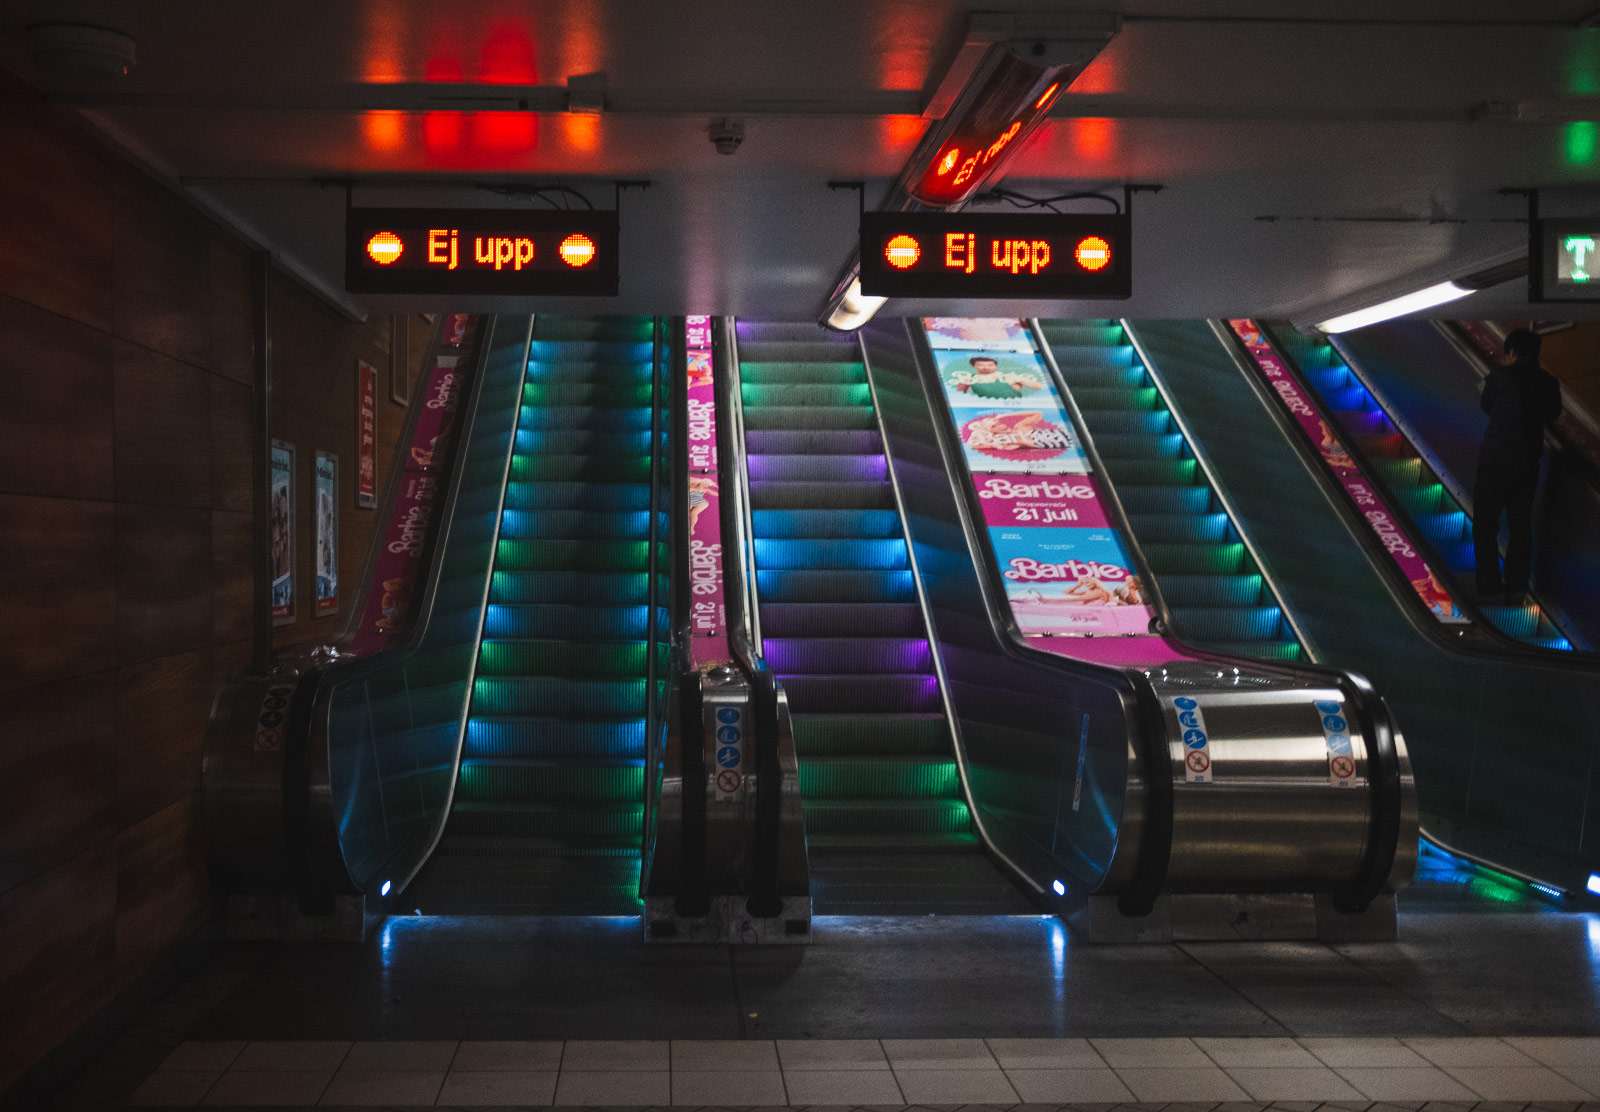 Coloured lights on escalator steps